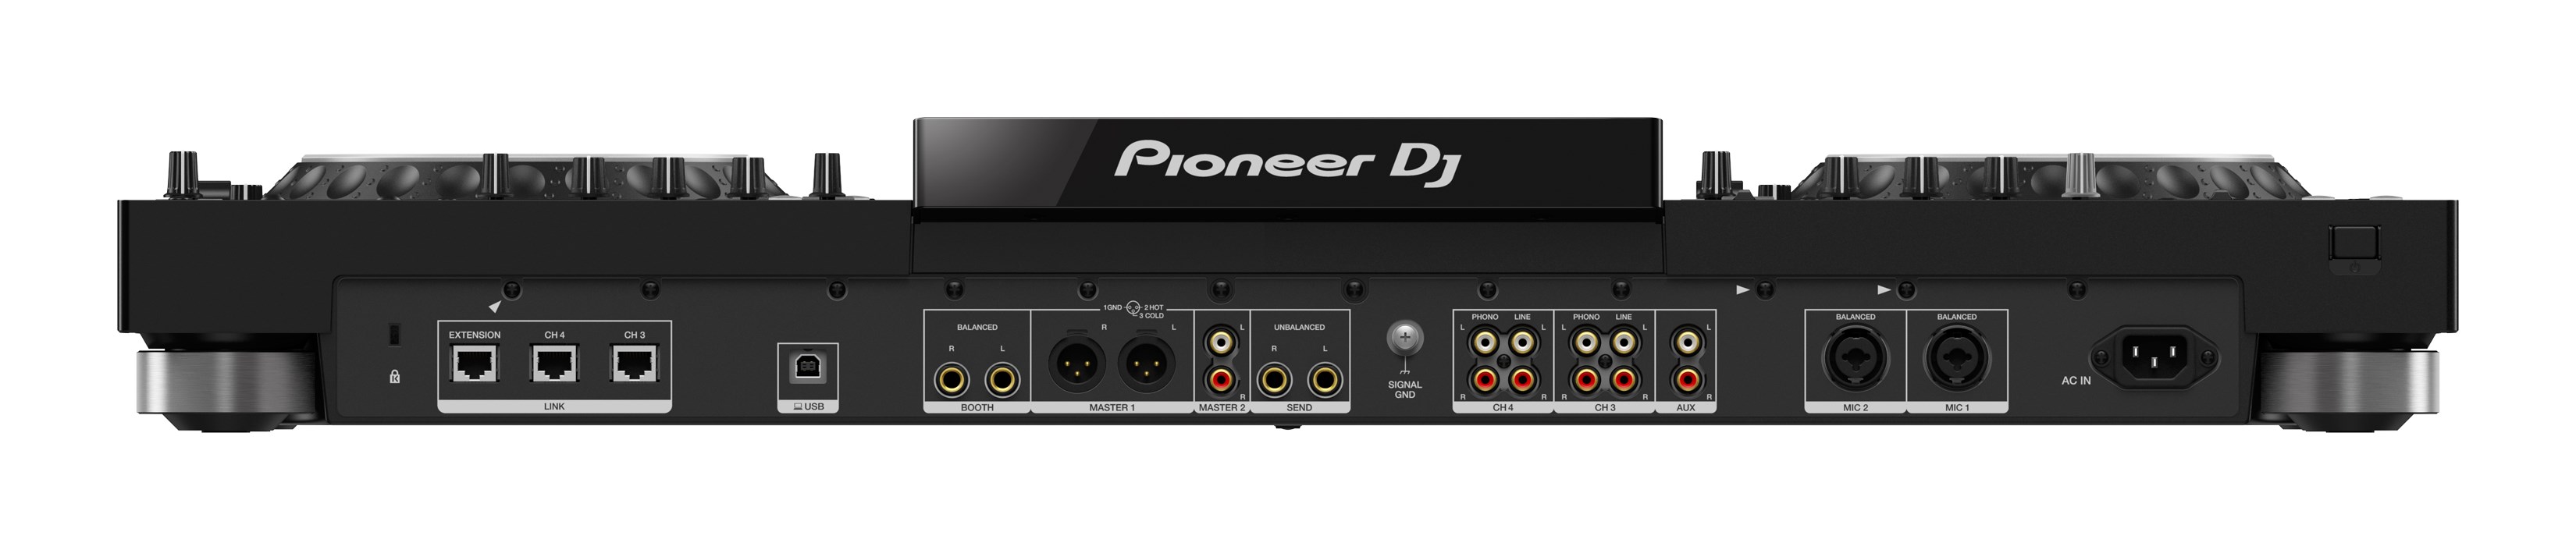 Pioneer Dj Xdj-xz - Standalone DJ Controller - Variation 3